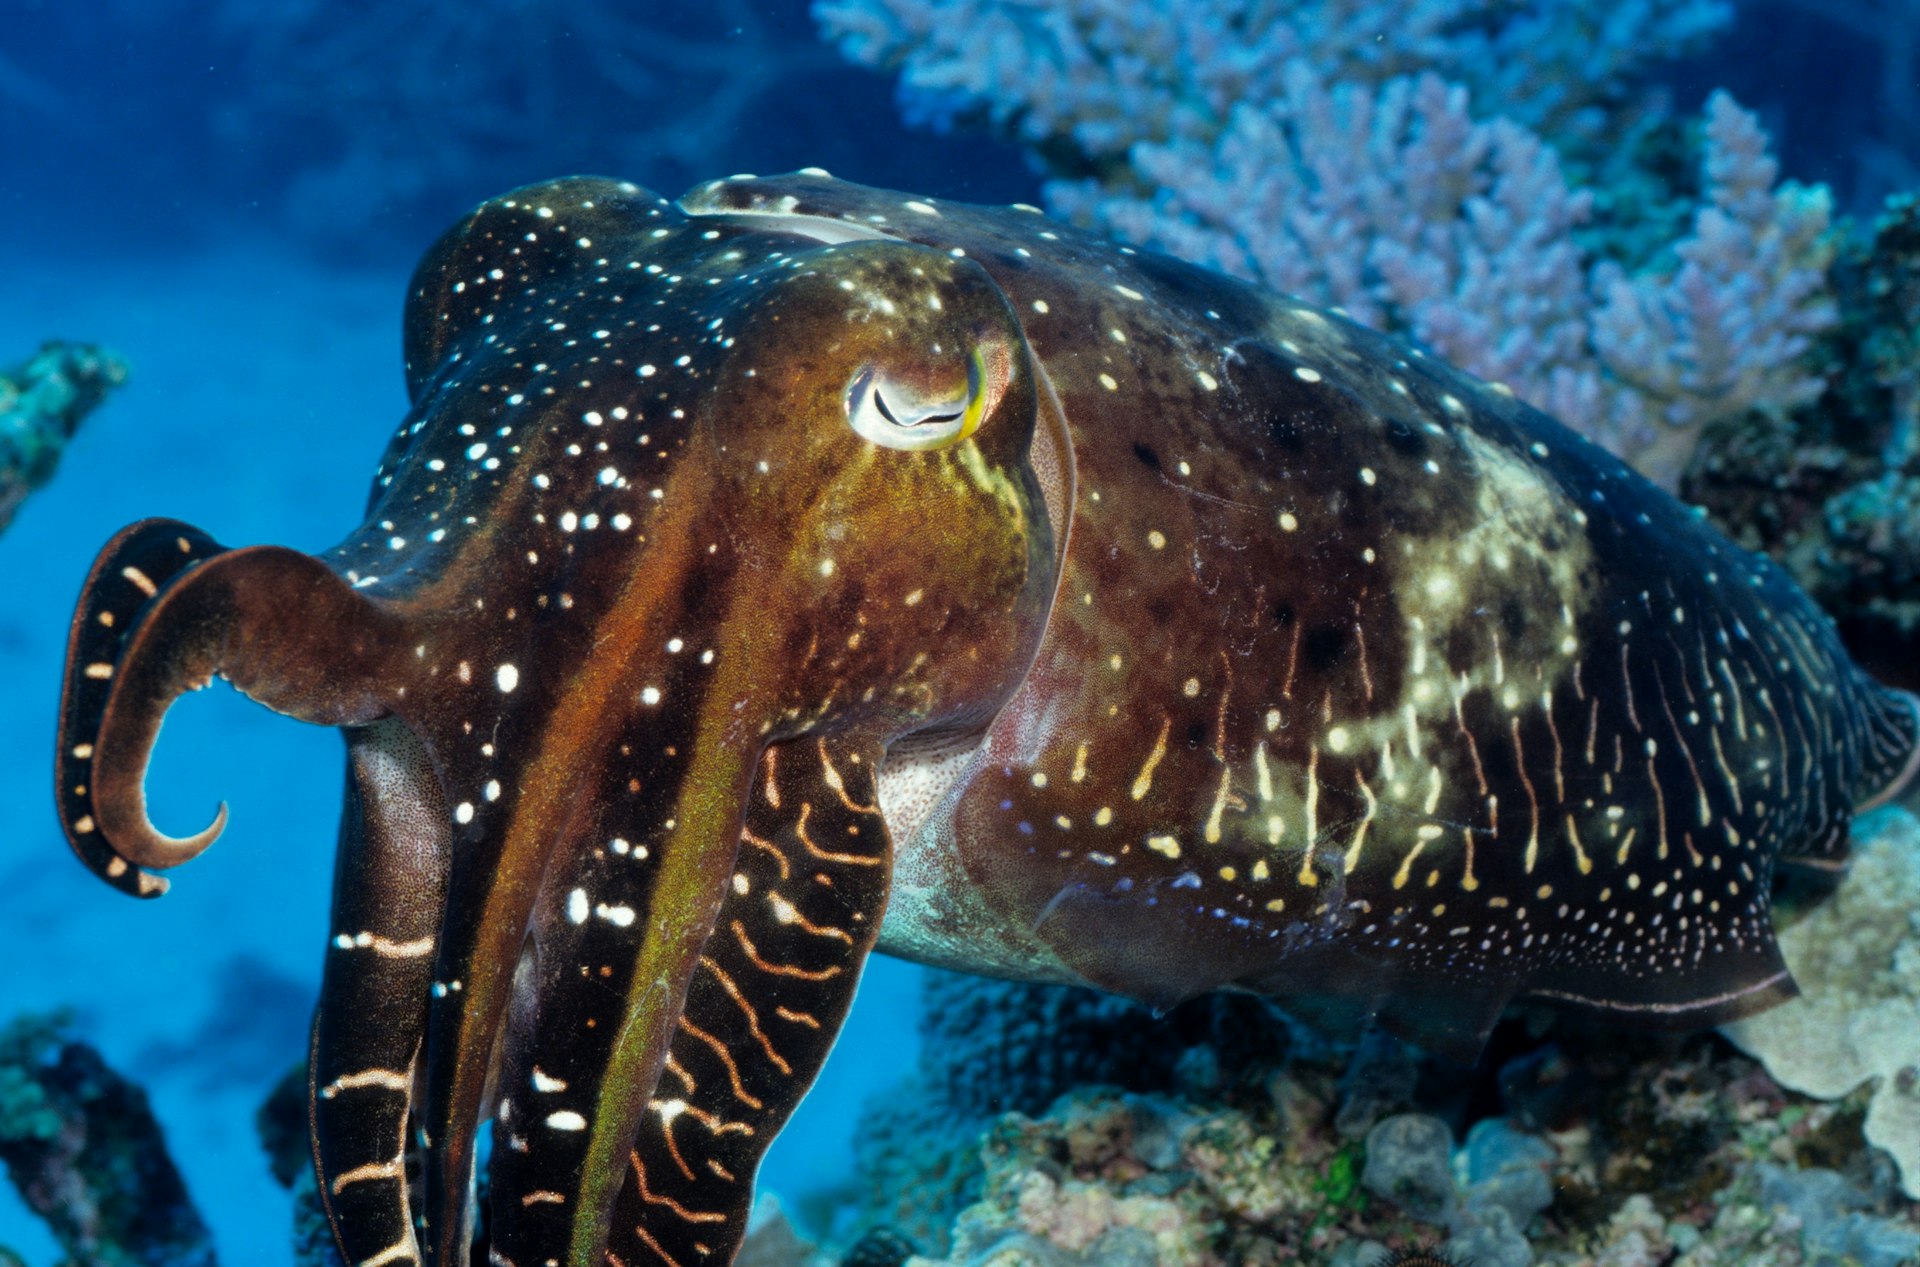 Giant cuttlefish close up by uwphoto 